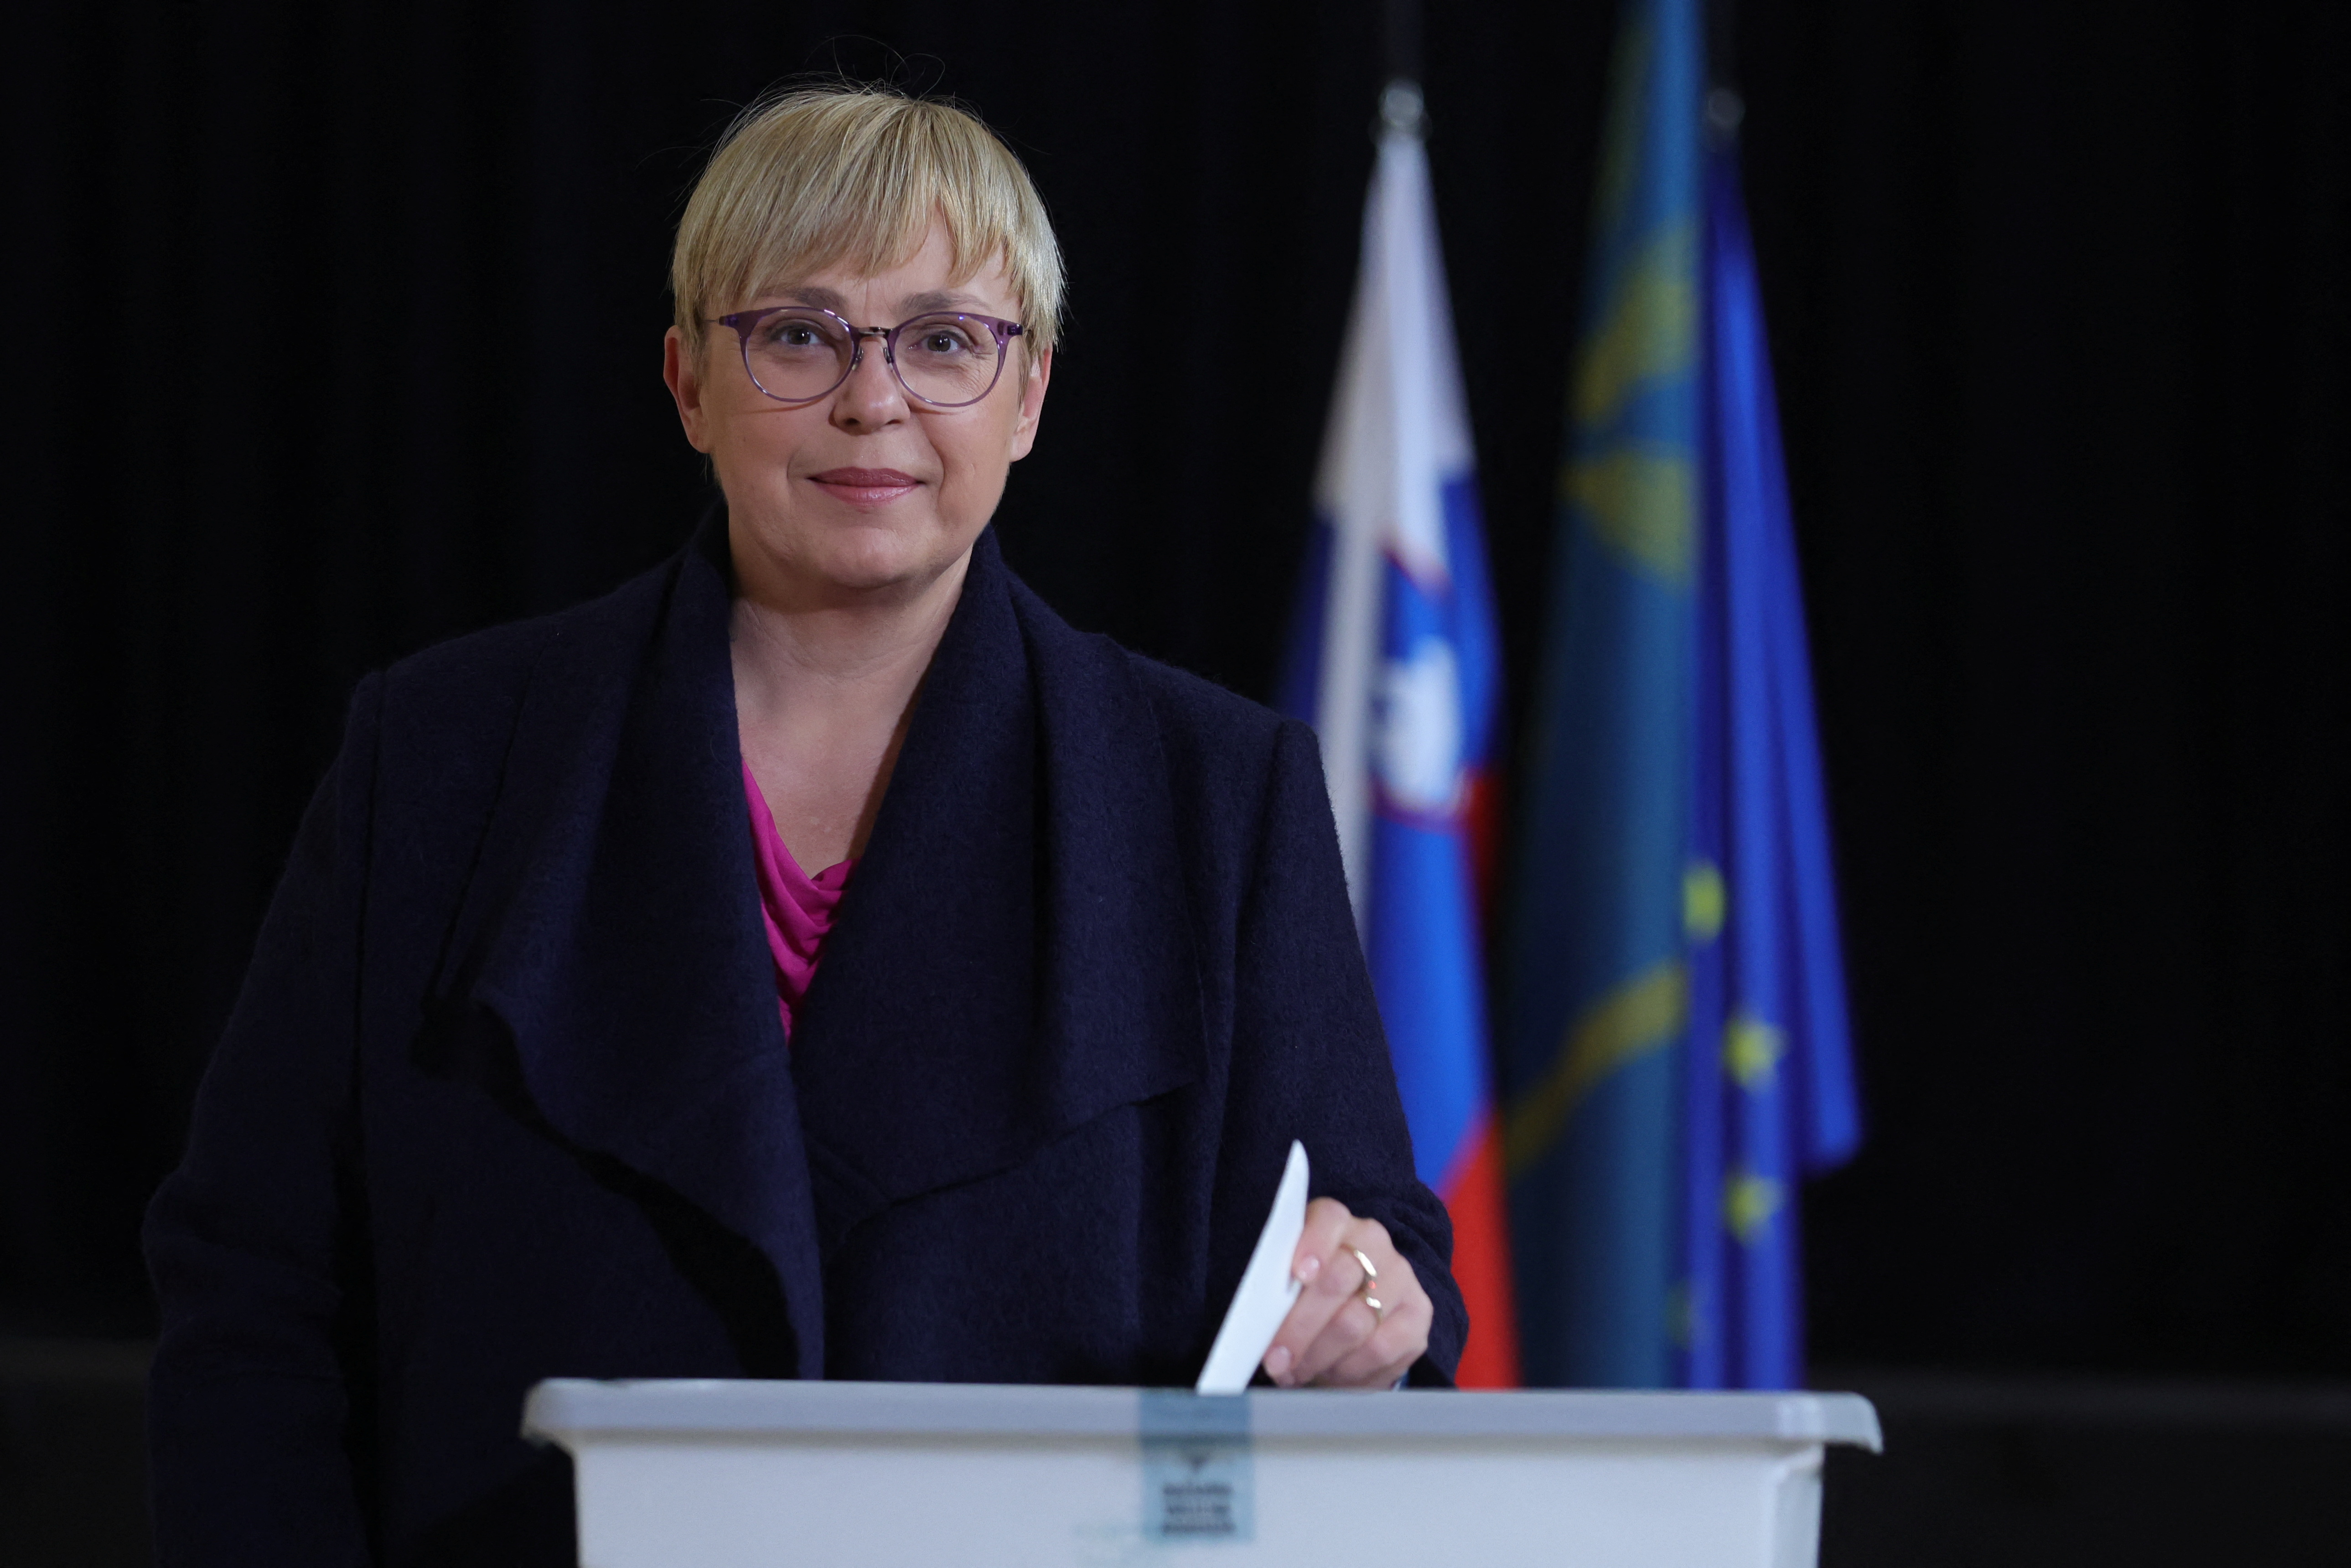 Lawyer Natasa Pirc Musar wins Slovenian presidential vote